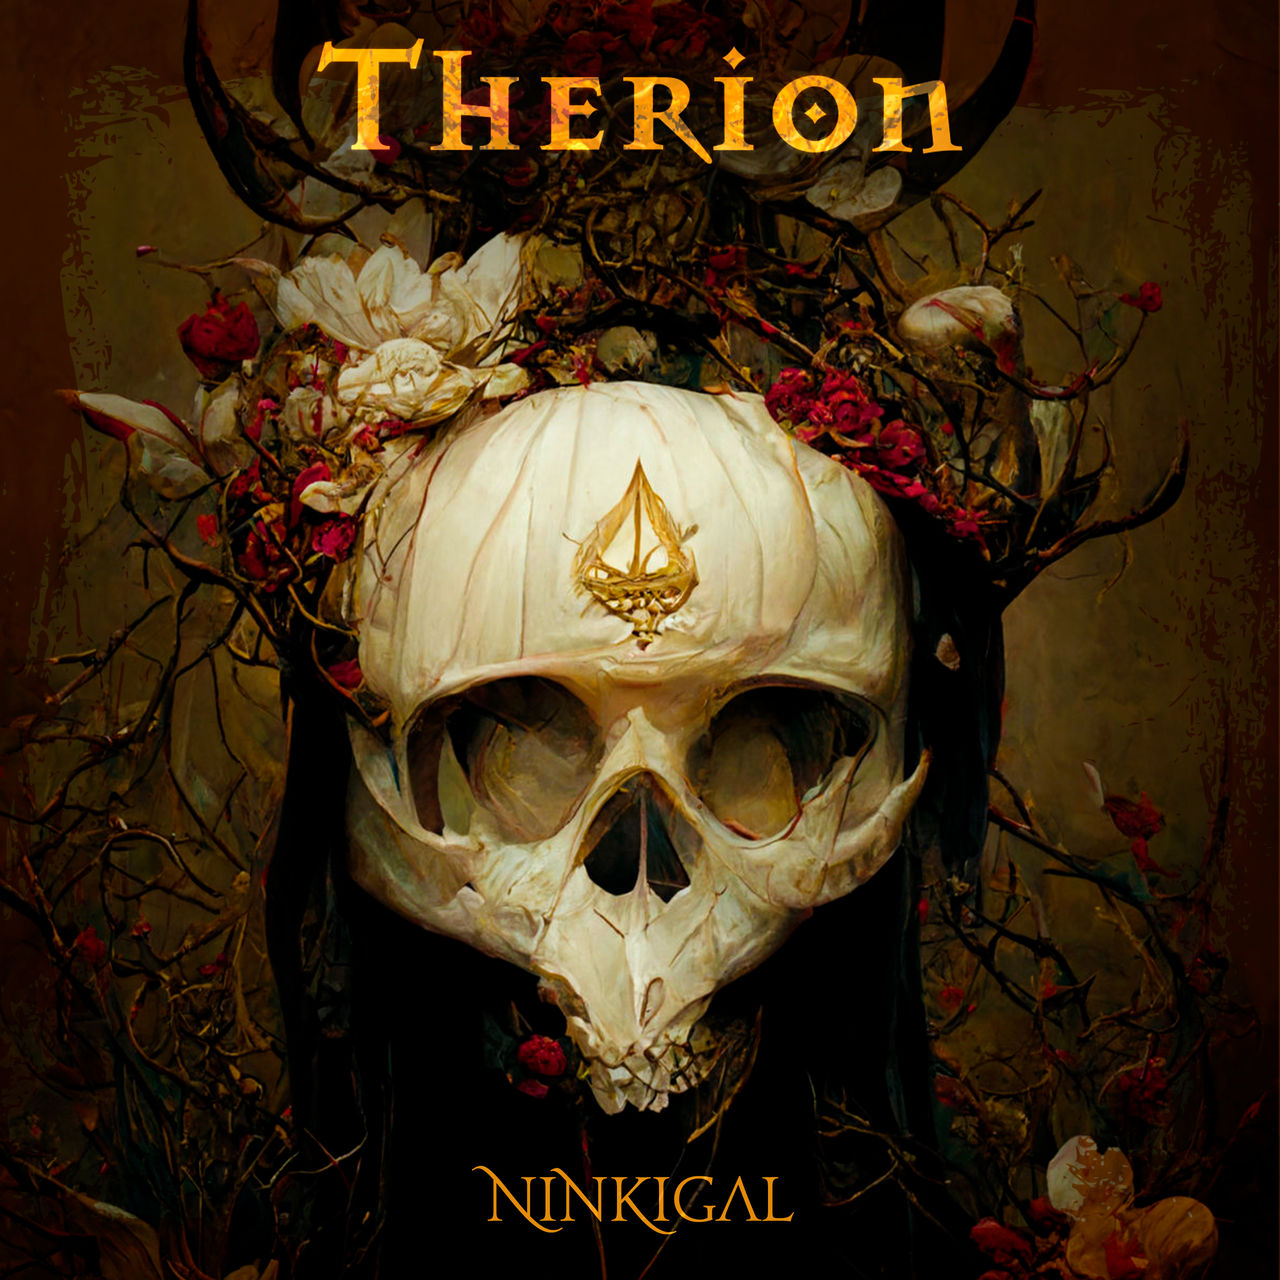 Therion NInkigal by Histrionator on DeviantArt